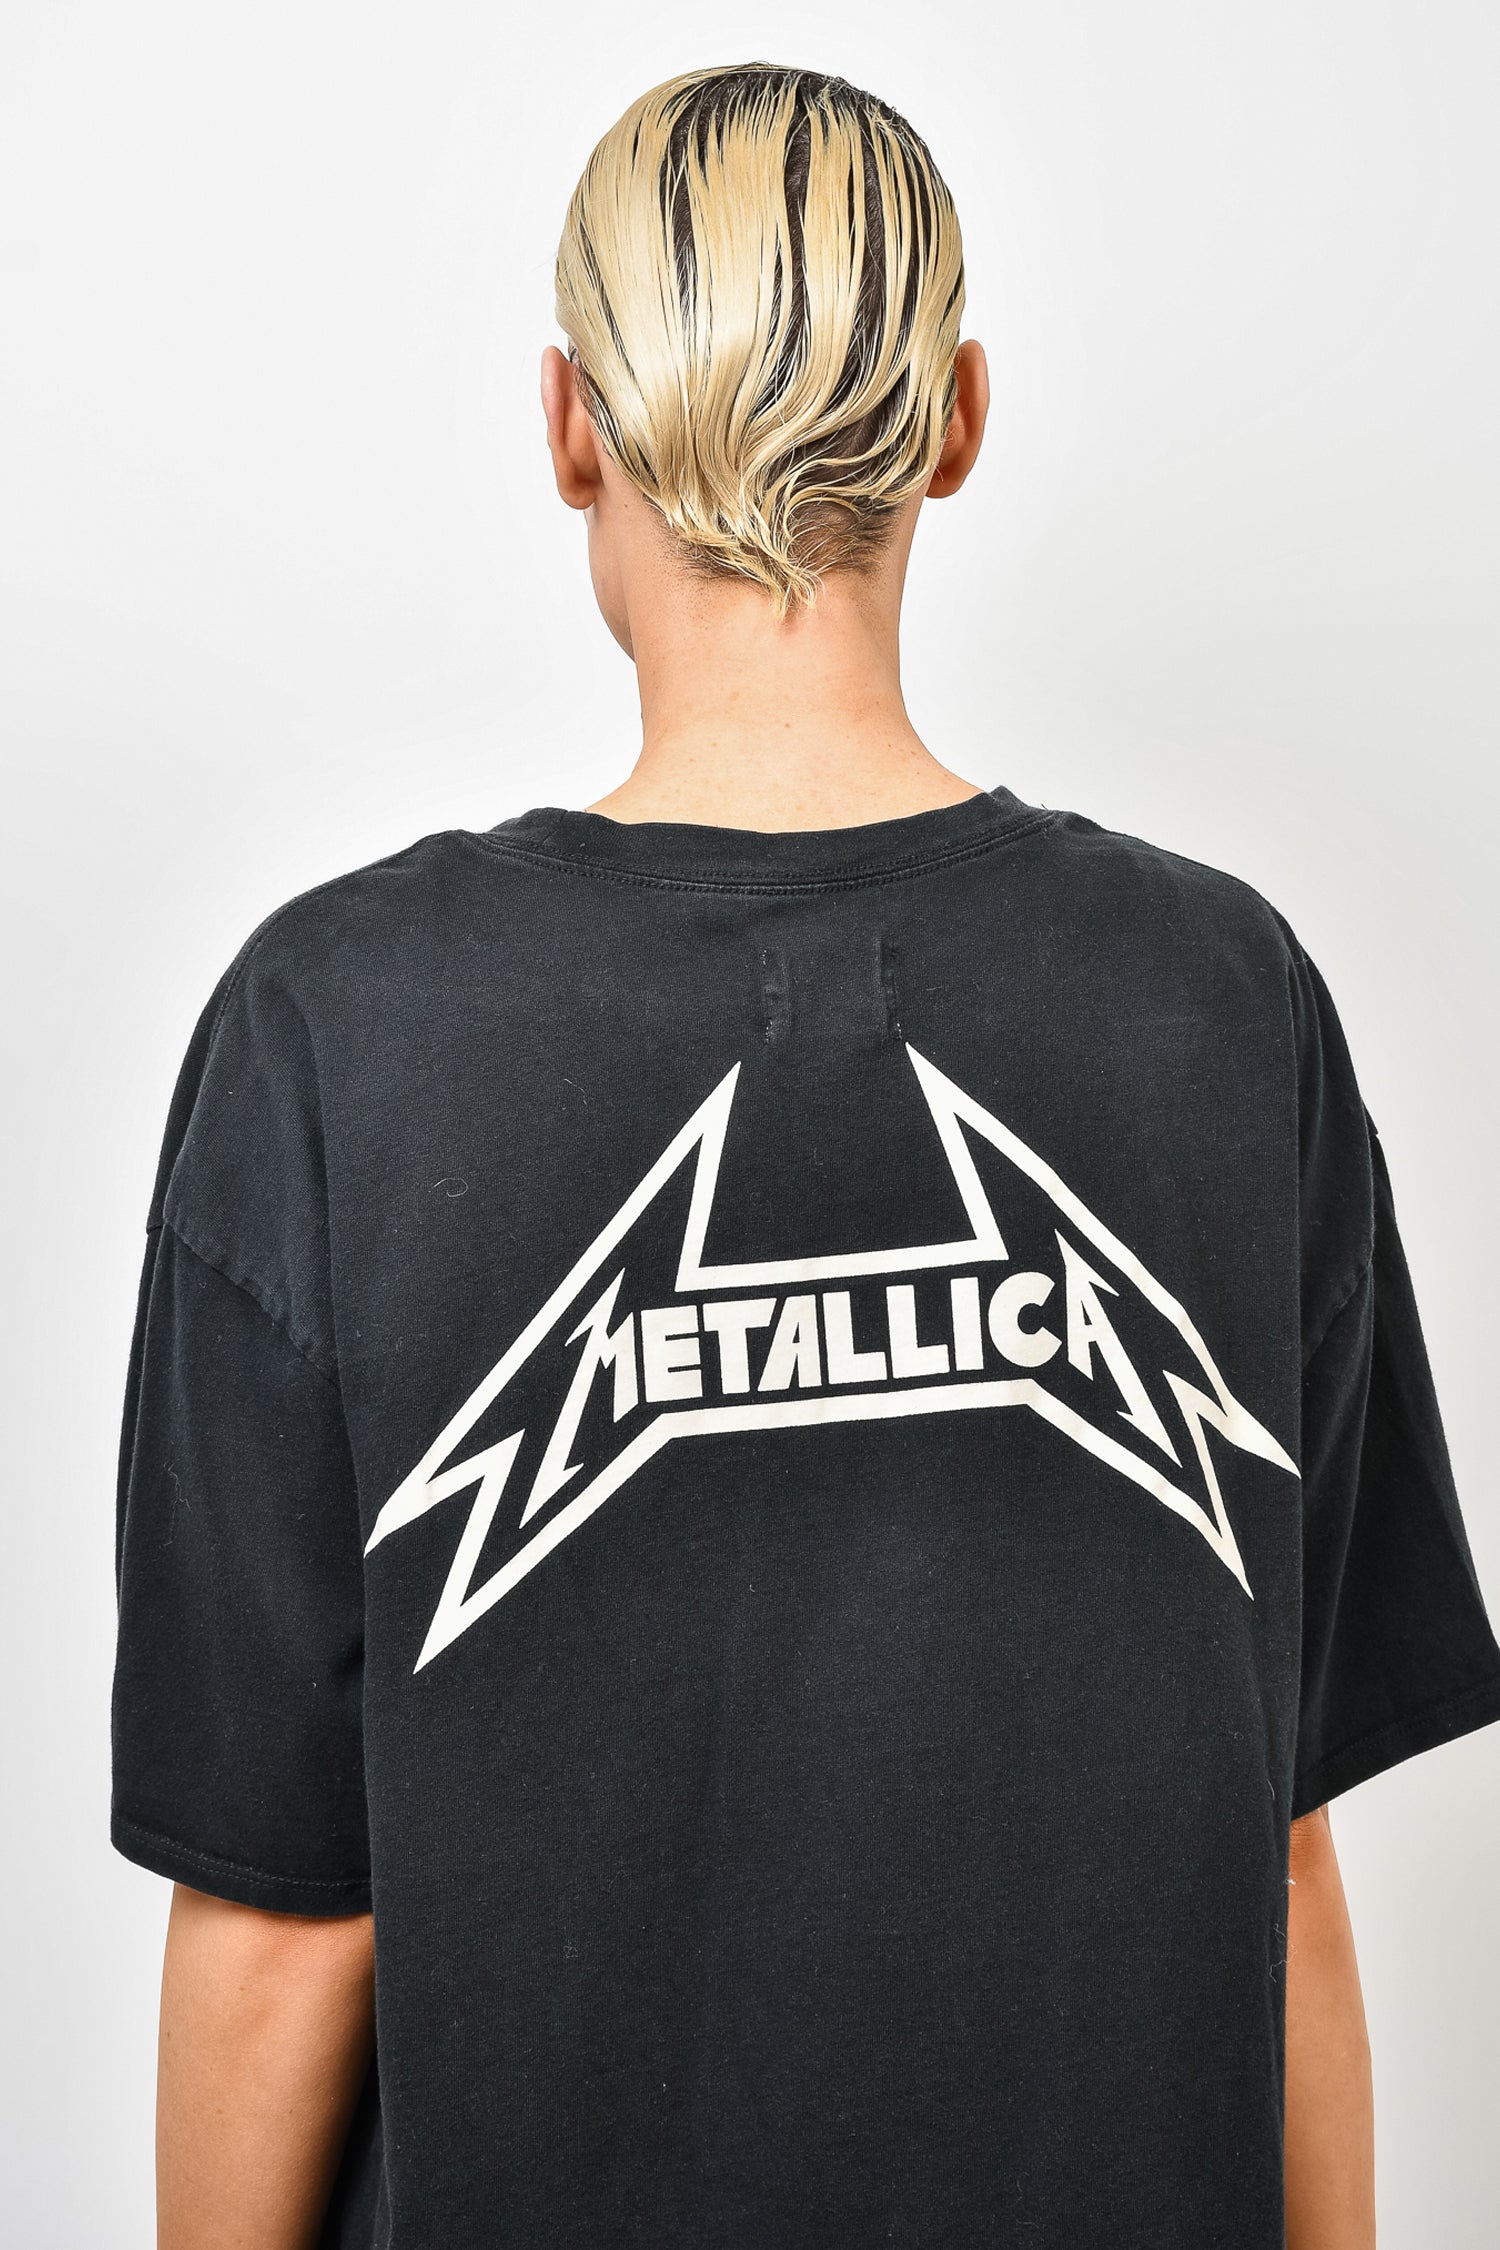 Fear of God Black 'Metallica' S/S T-Shirt sz L